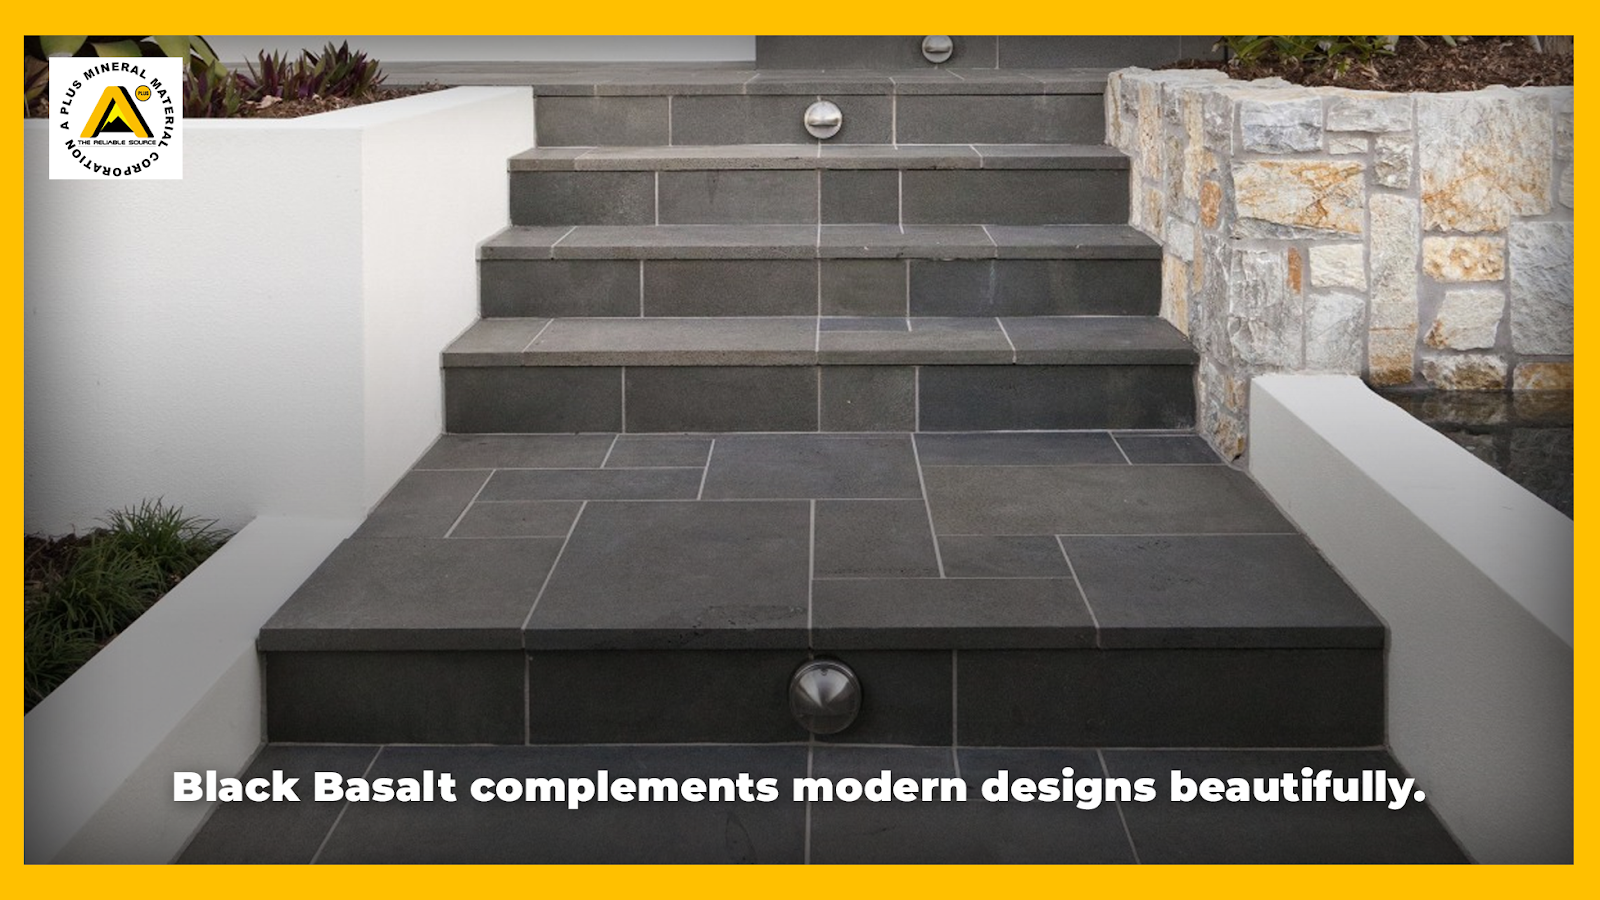 Black Basalt complements modern designs beautifully